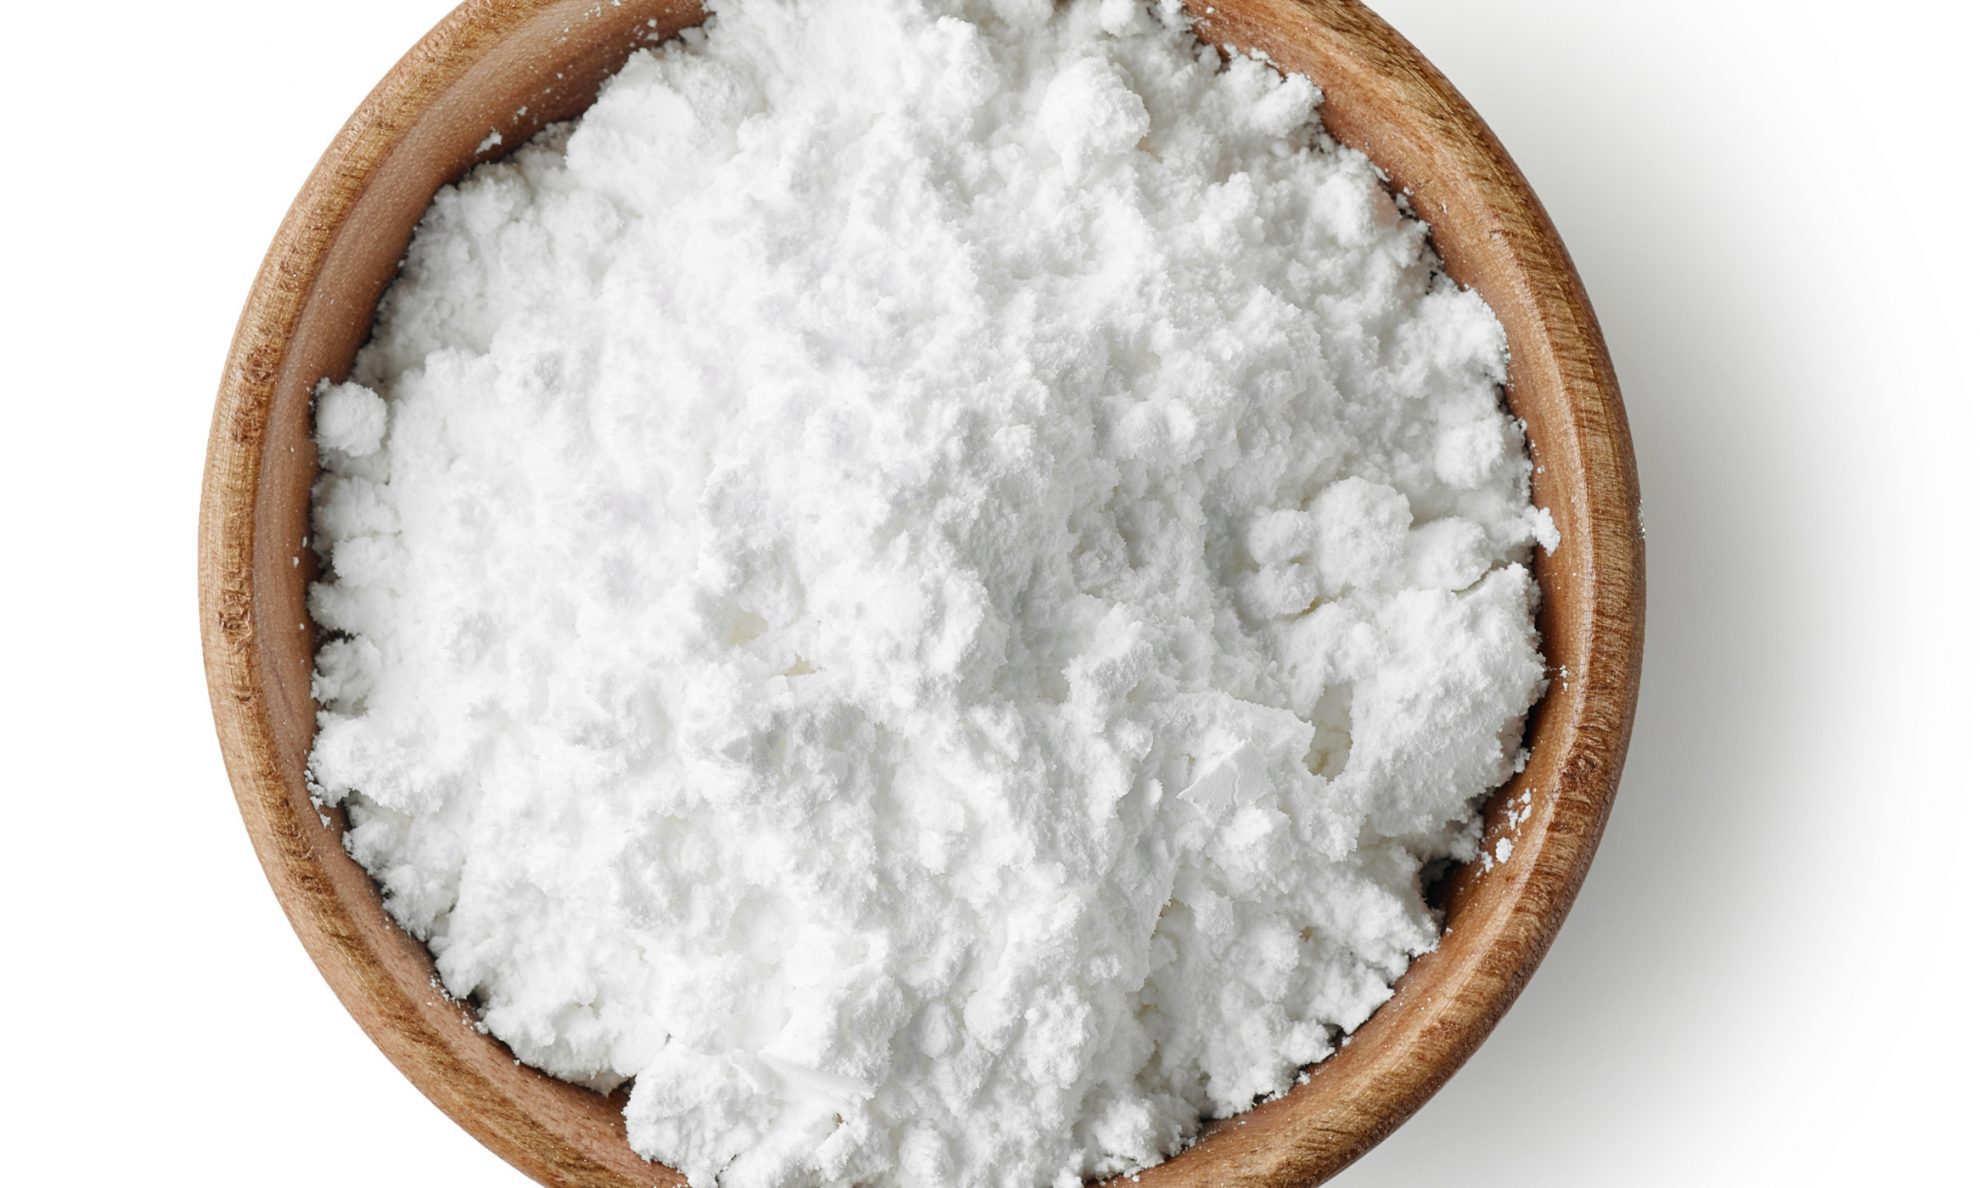 https://www.savoryexperiments.com/wp-content/uploads/2021/04/powdered-sugar-1.jpg